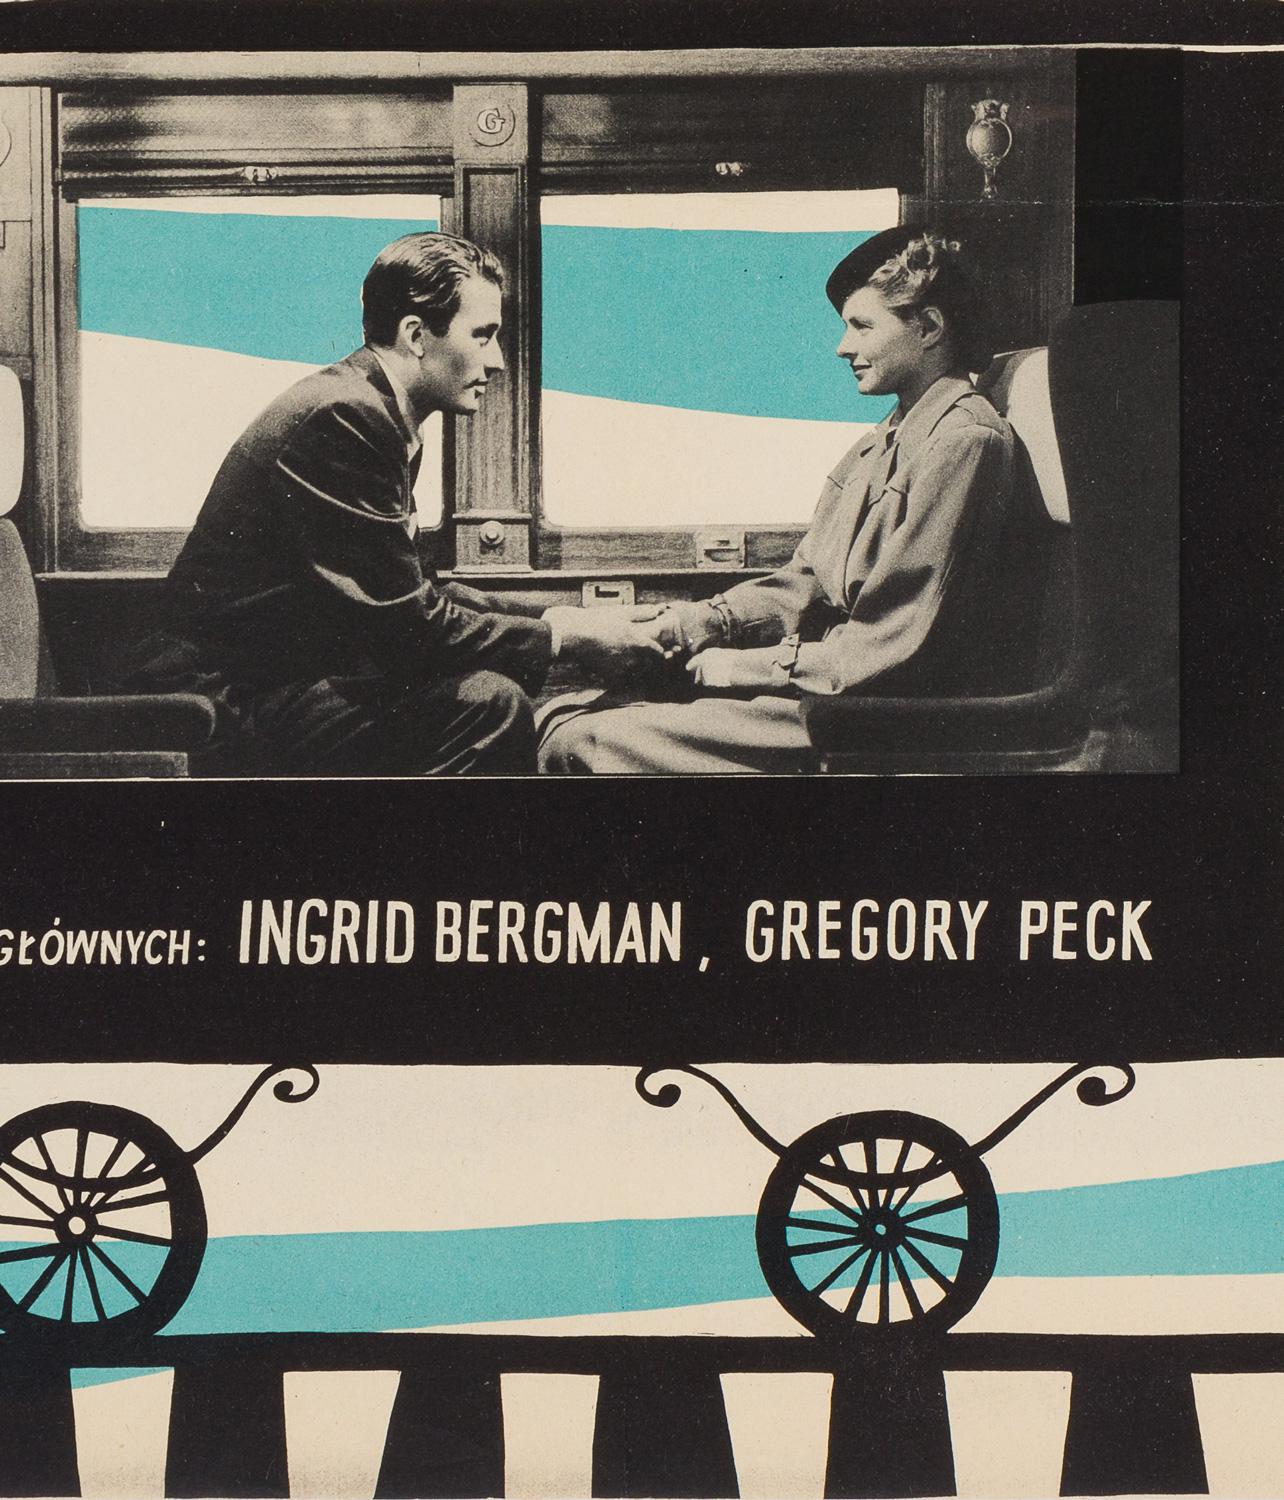 Spellbound Original Polish Film Poster, Andrzej Heidrich, 1959 1